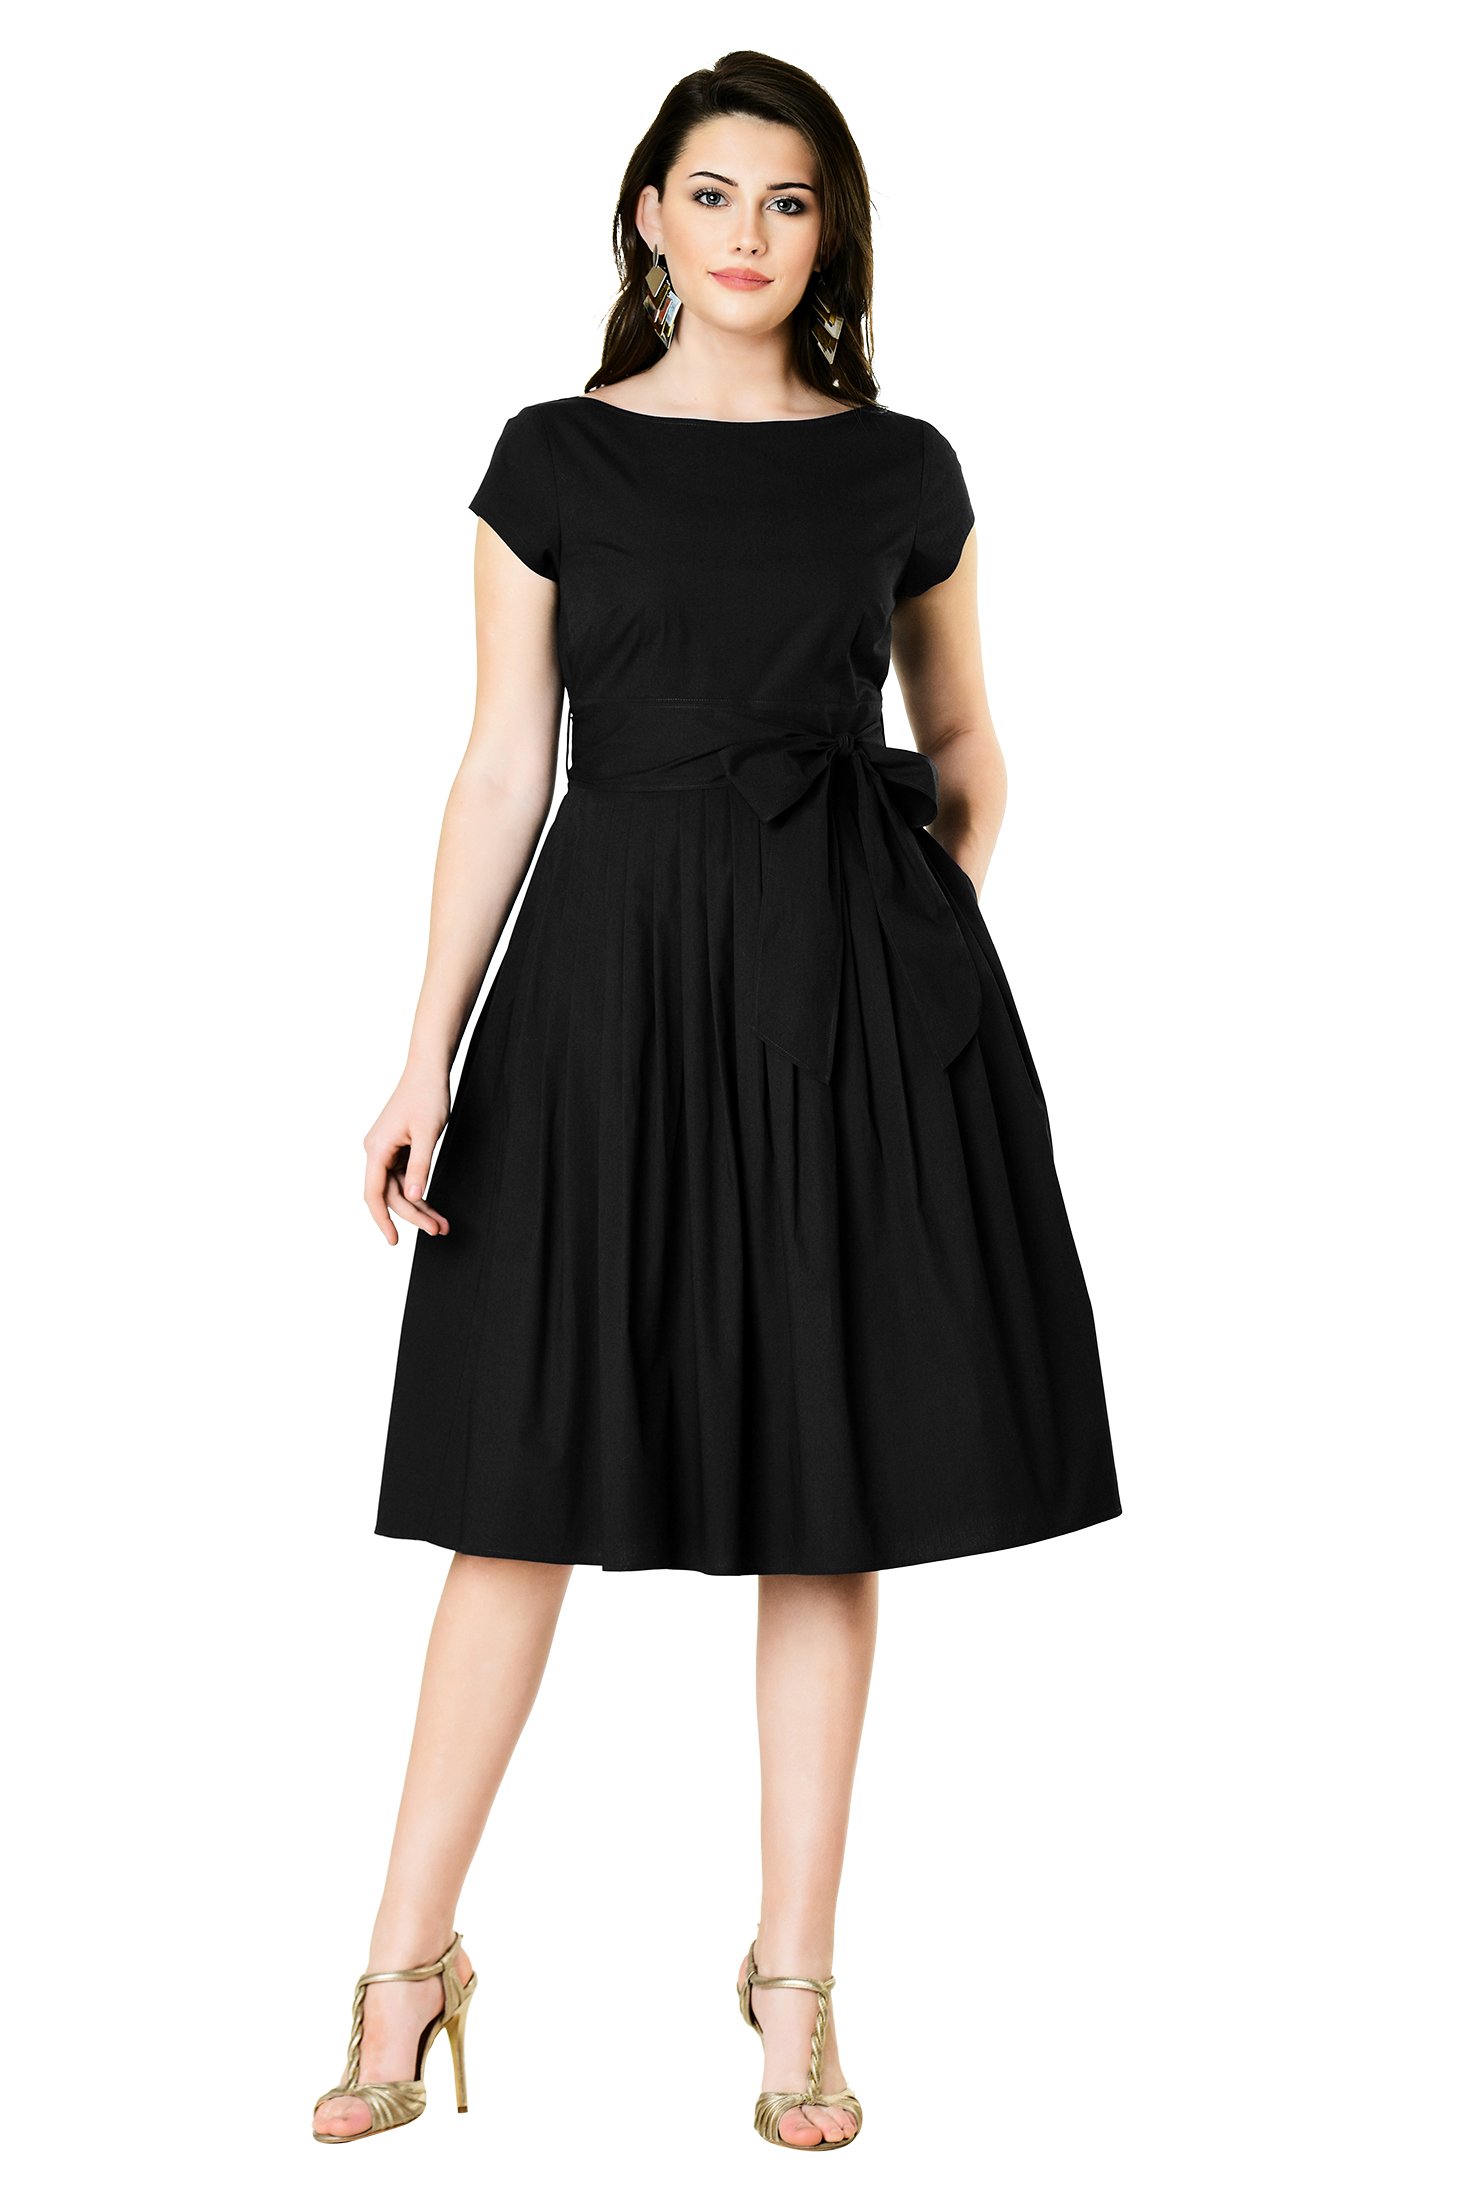 Adjustable waist poplin dress, Twik, Women's Short Dresses